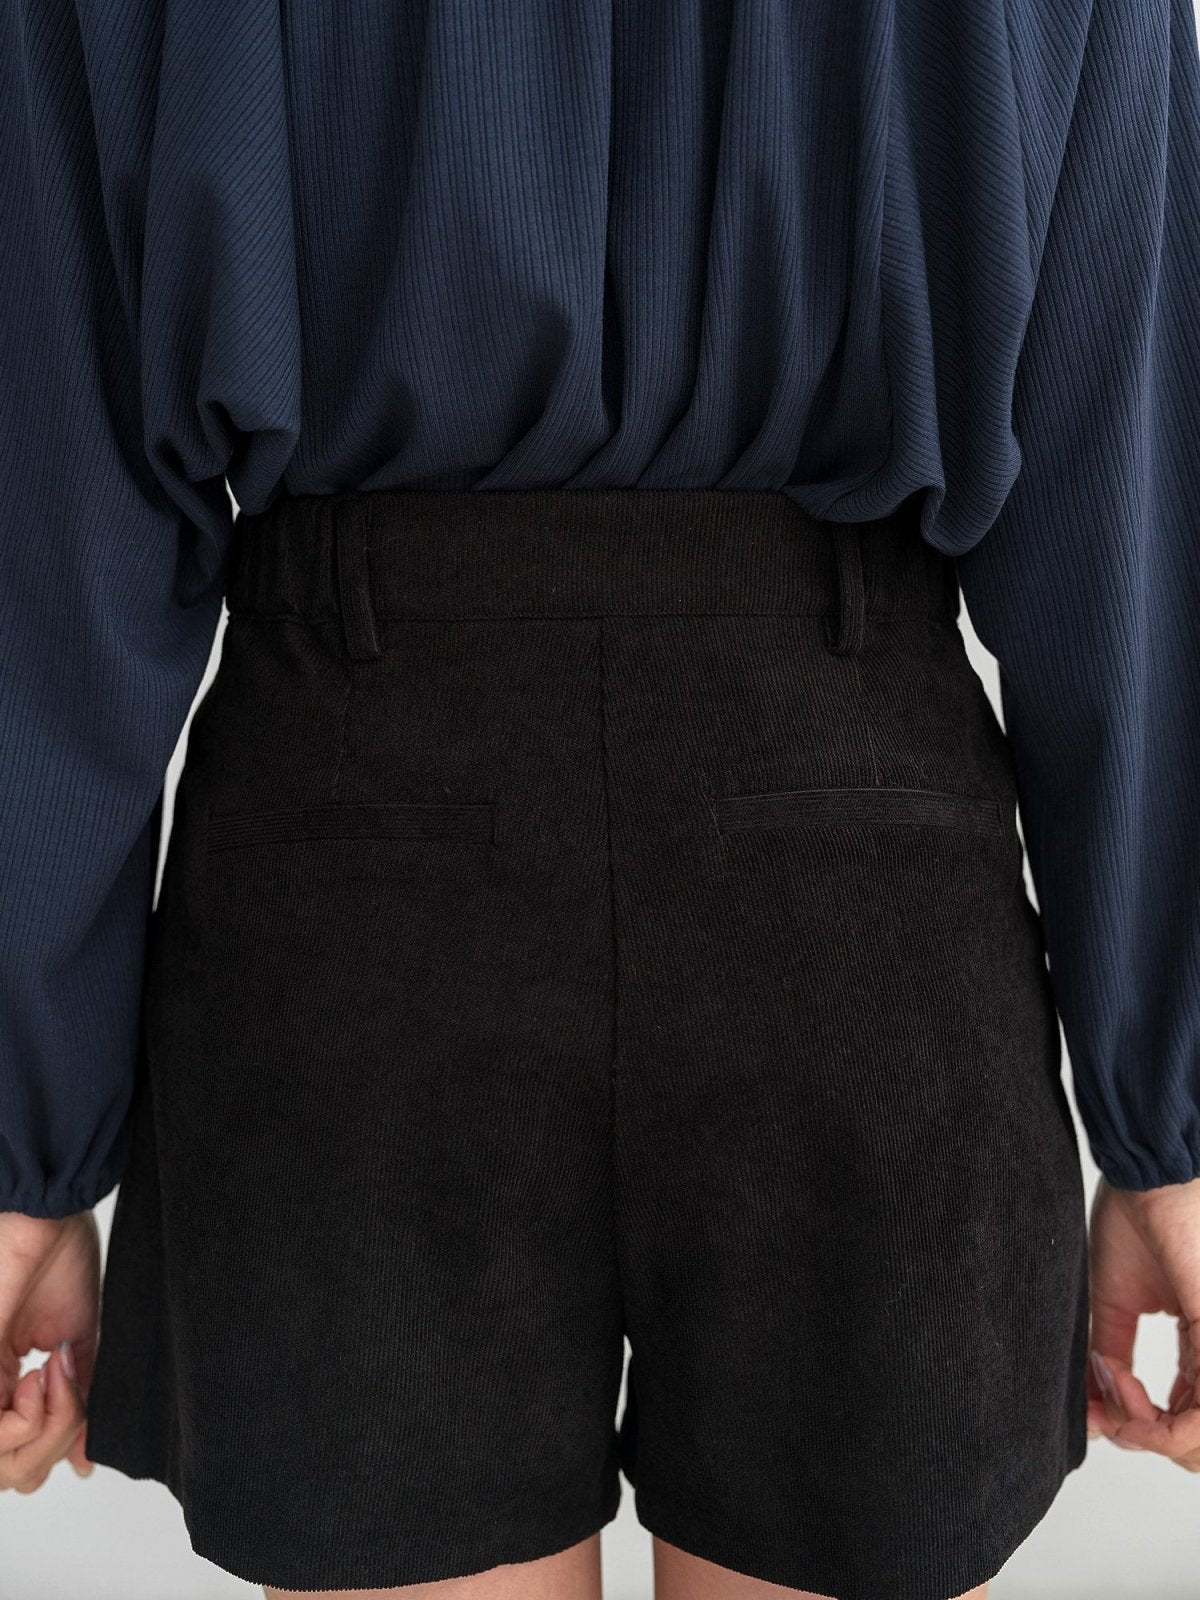 Corduroy Pleated Shorts - DAG-DD1385-24BlackS - Black - S - D'zage Designs